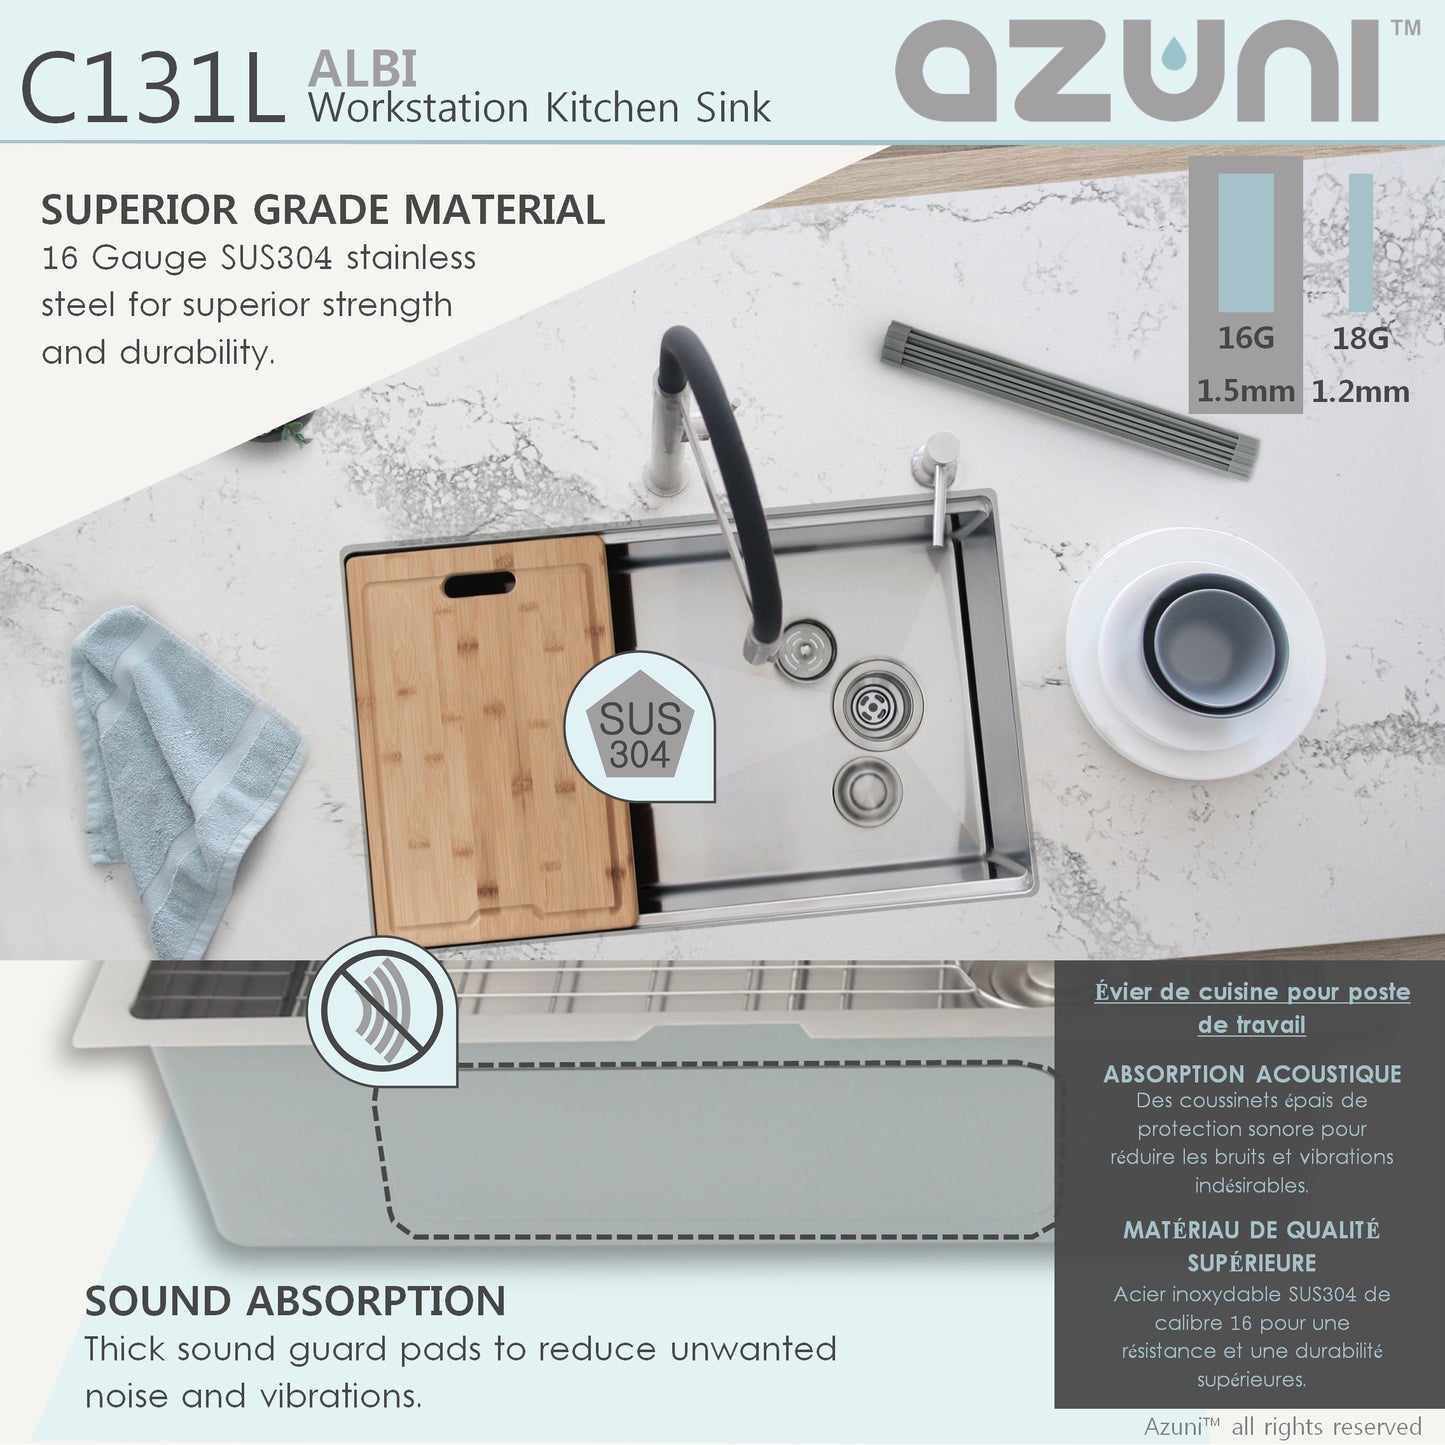 AZUNI 30"L x 19"W Albi Undermount Single Bowl Kitchen Sink Workstation with Accessories Included